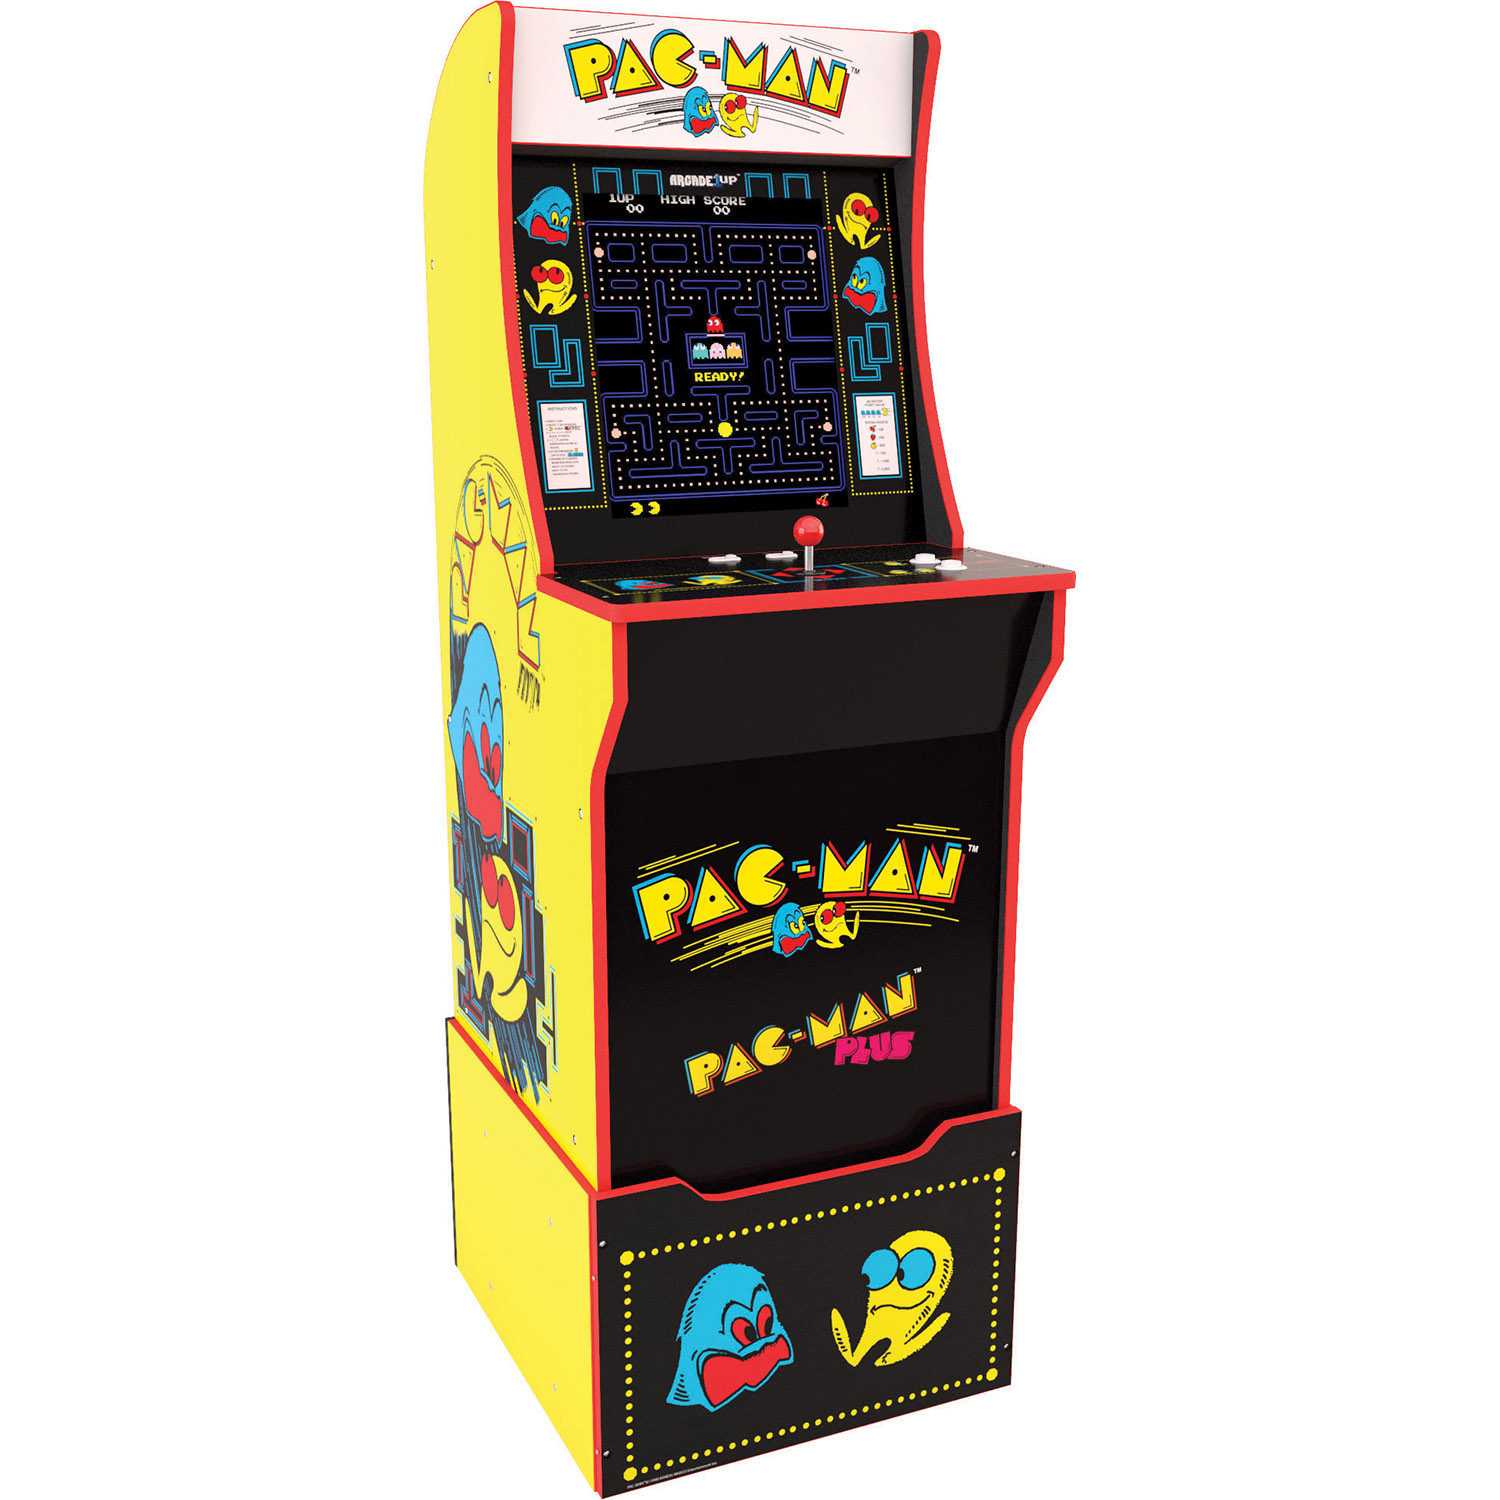 Pac-Man Arcade Machine with Riser, Arcade1UP - image 1 of 8